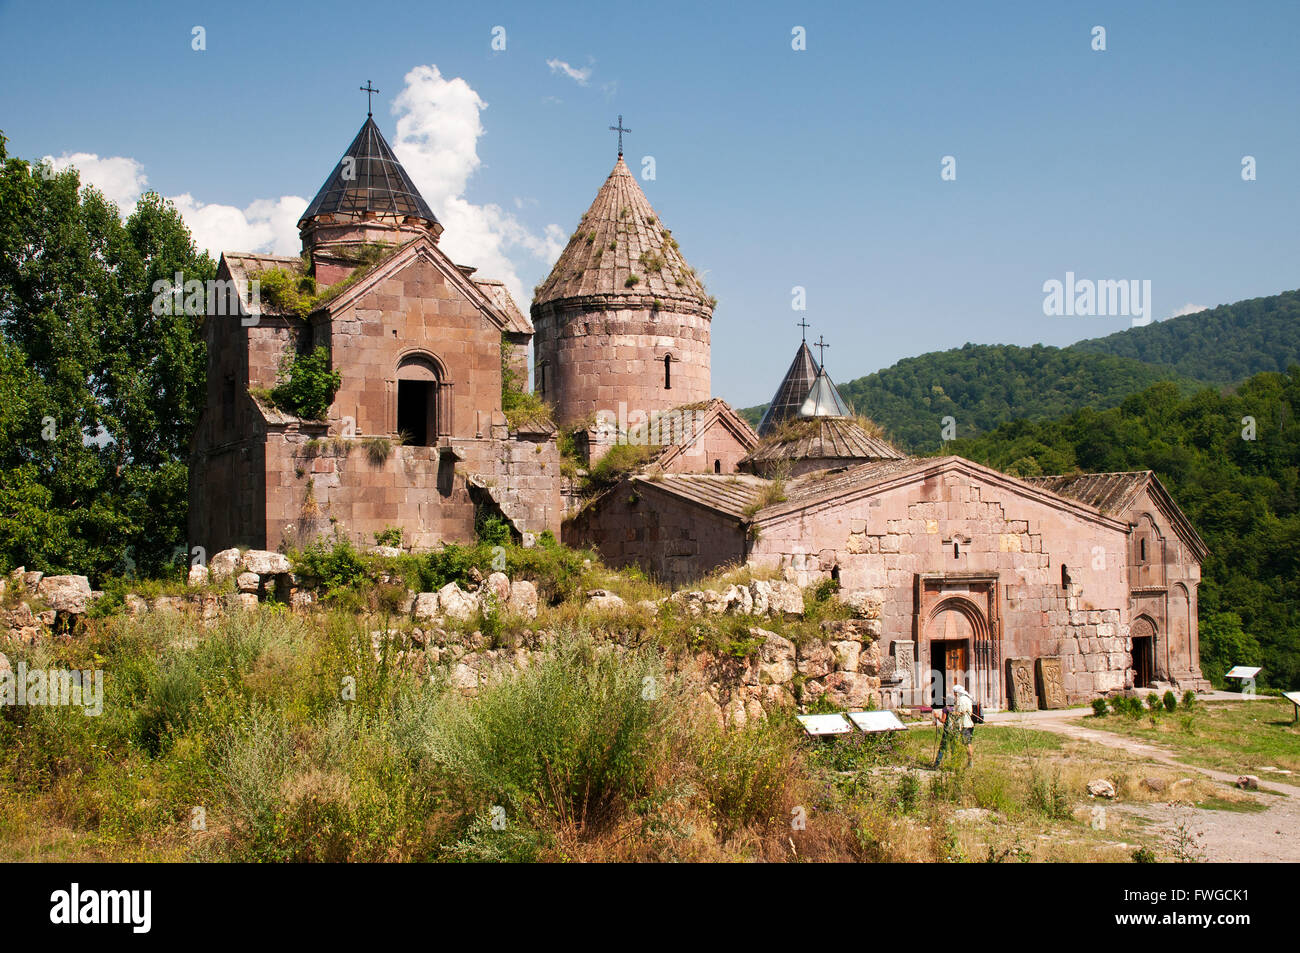 Goshavank Monastery previously known as Nor Getik a 12-13th century Armenian monastery located in the village of Gosh. Stock Photo